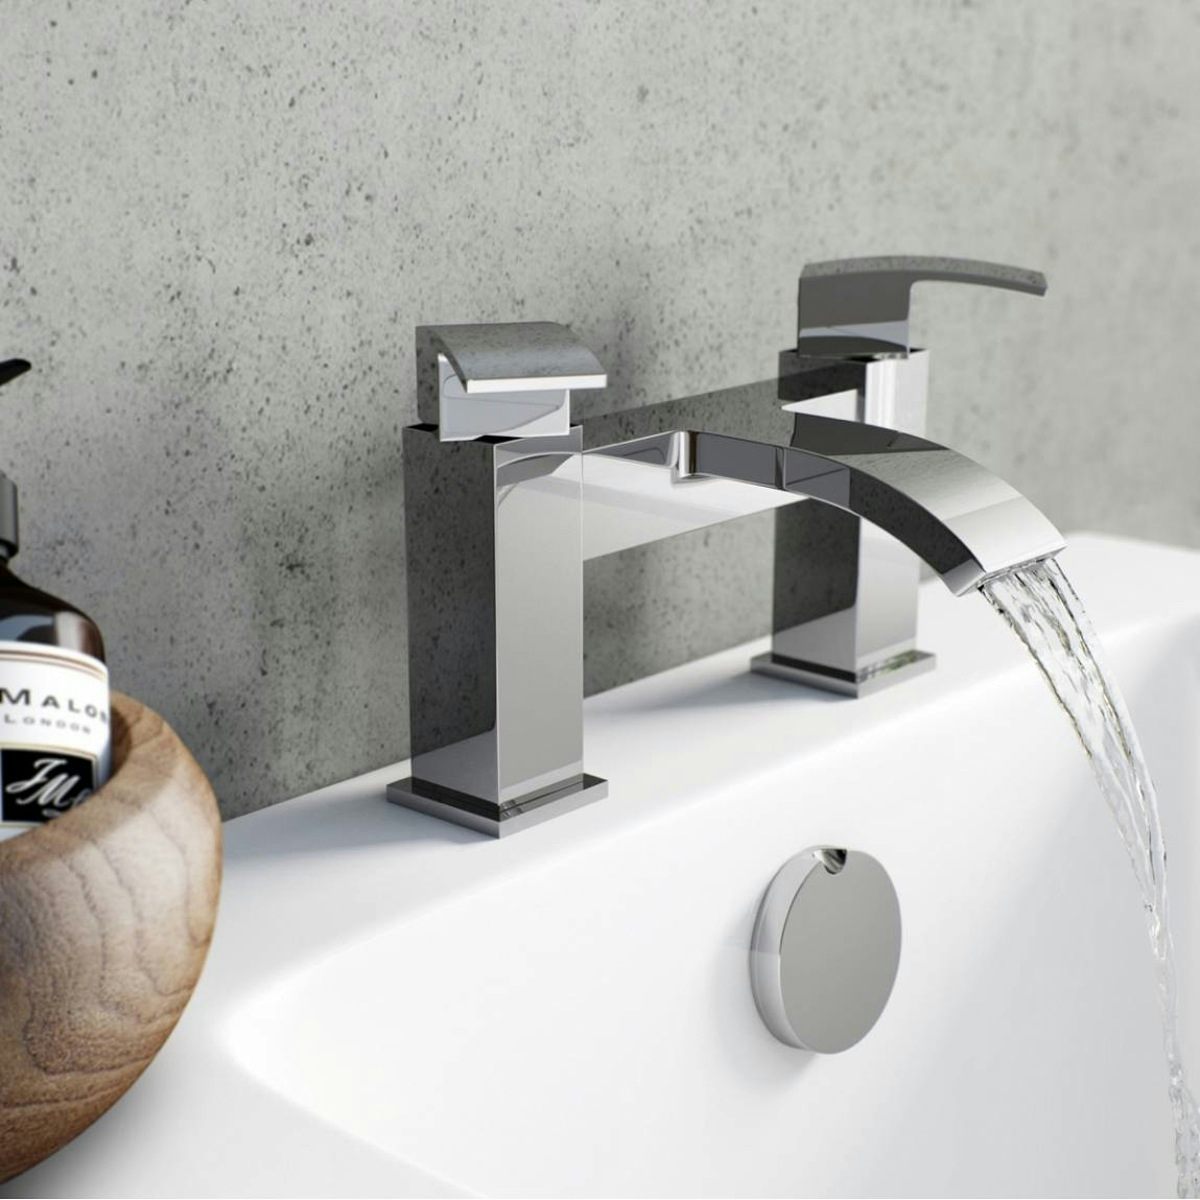 Century bath mixer tap